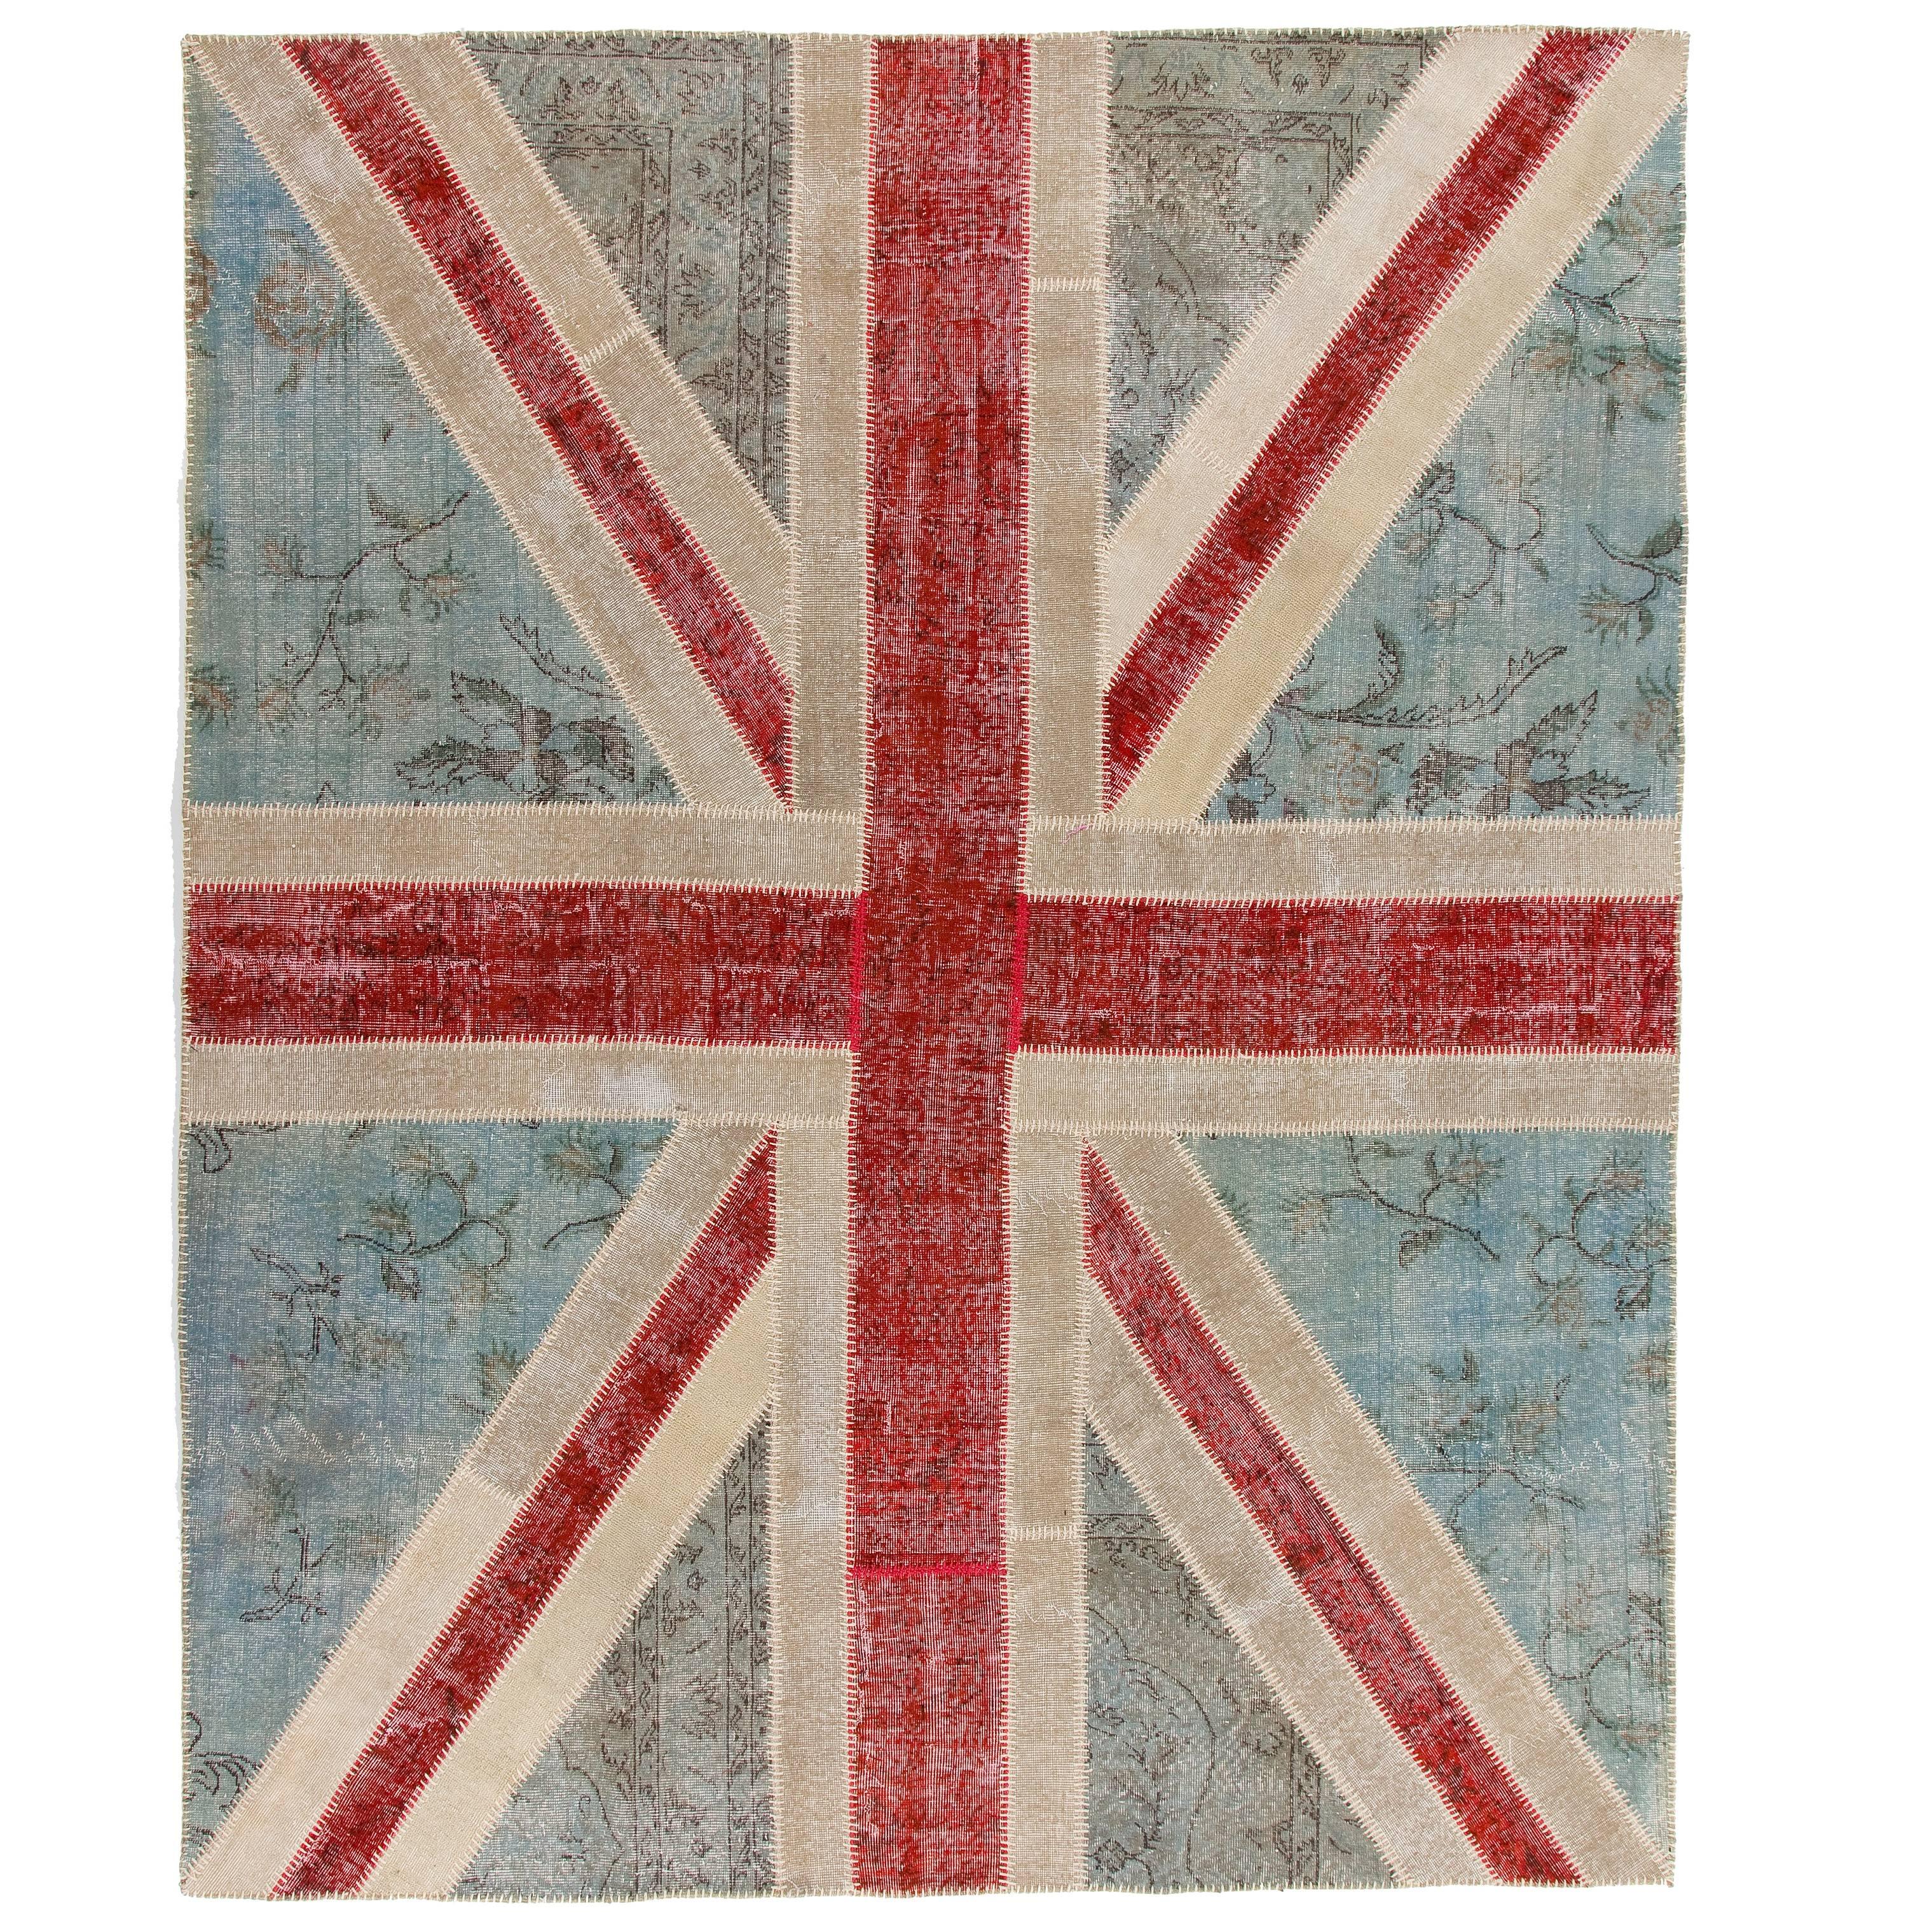 Union Jack British Flag Design Handmade Patchwork Rug. Custom Options Available